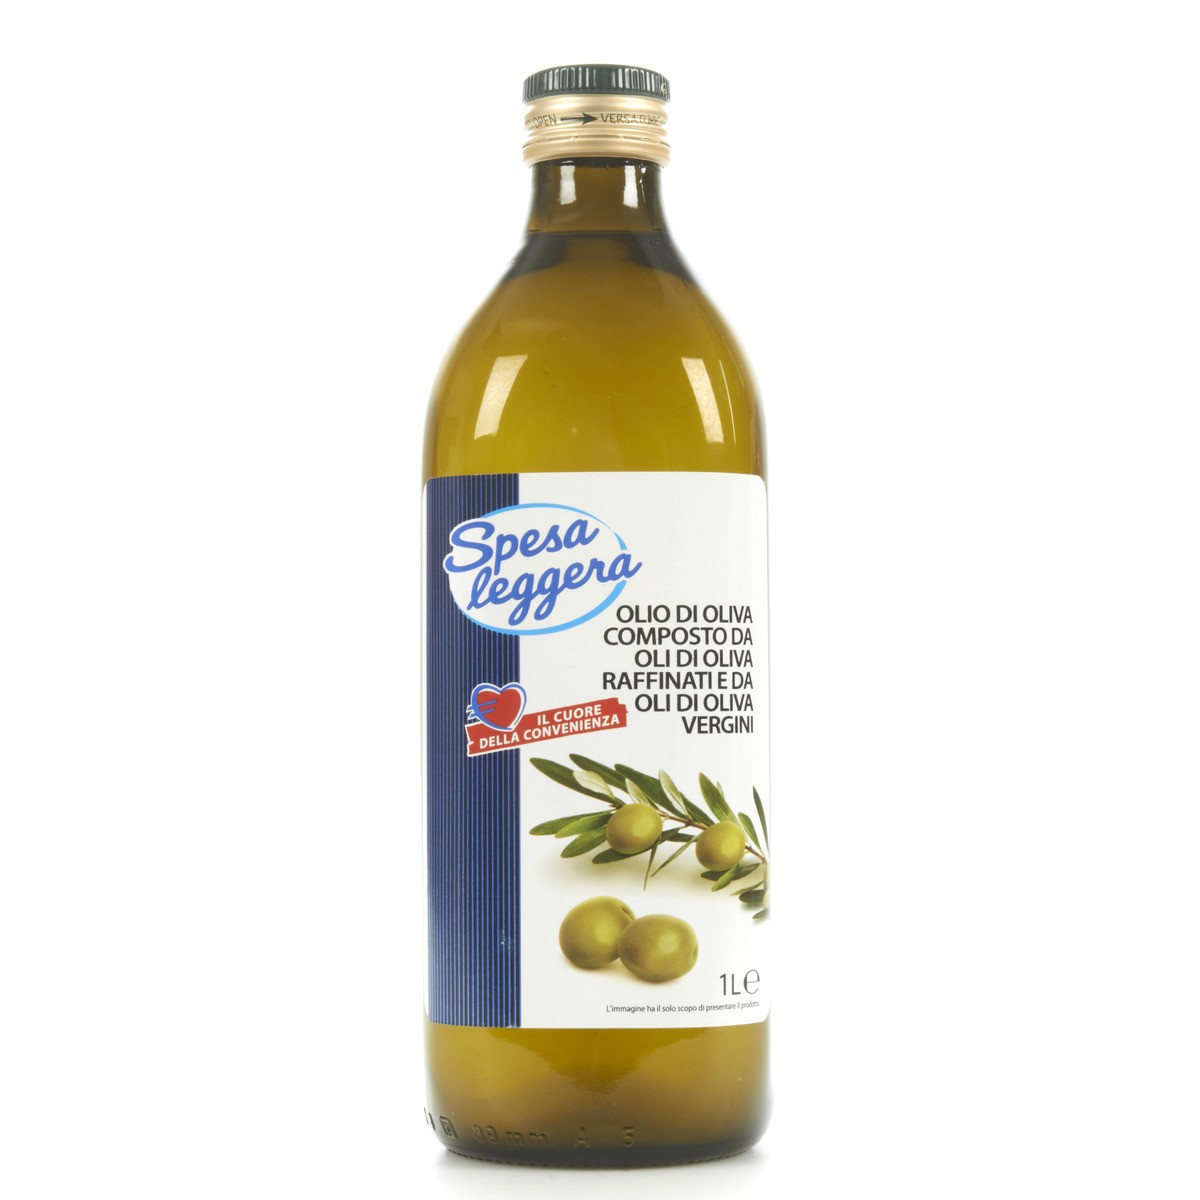 Spesa Leggera Olio di oliva raffinato e vergine